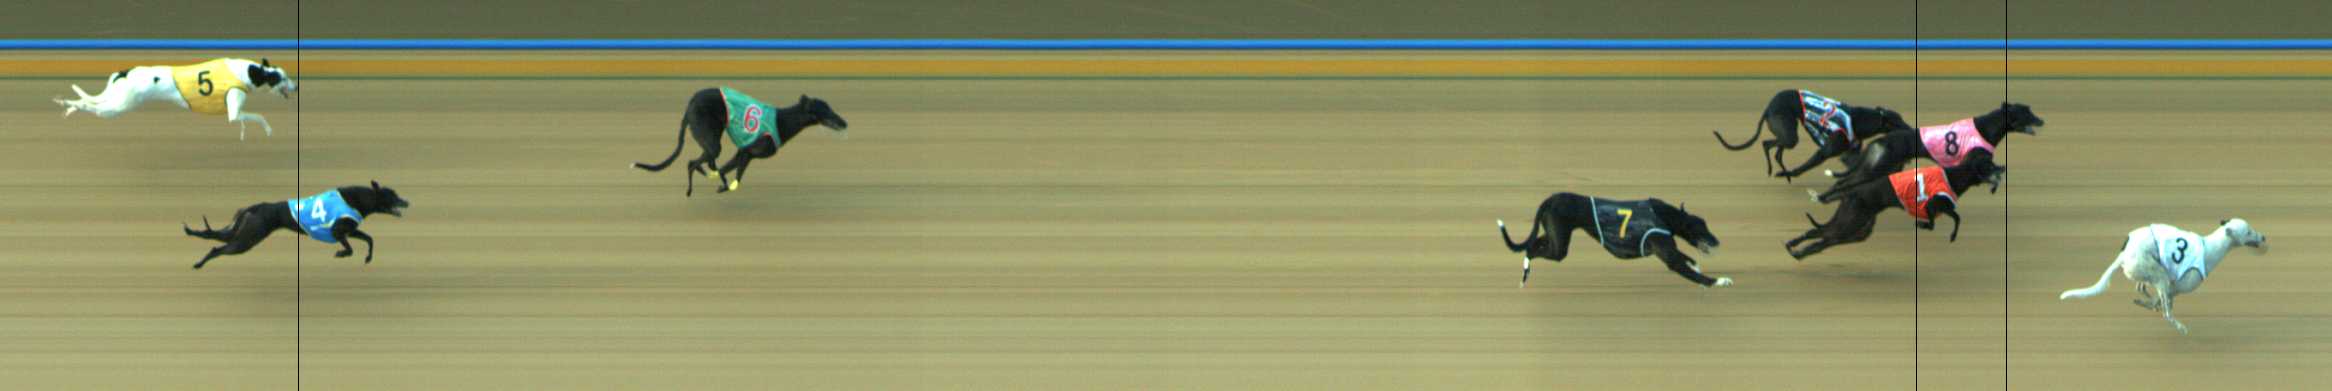 Race result finish photo